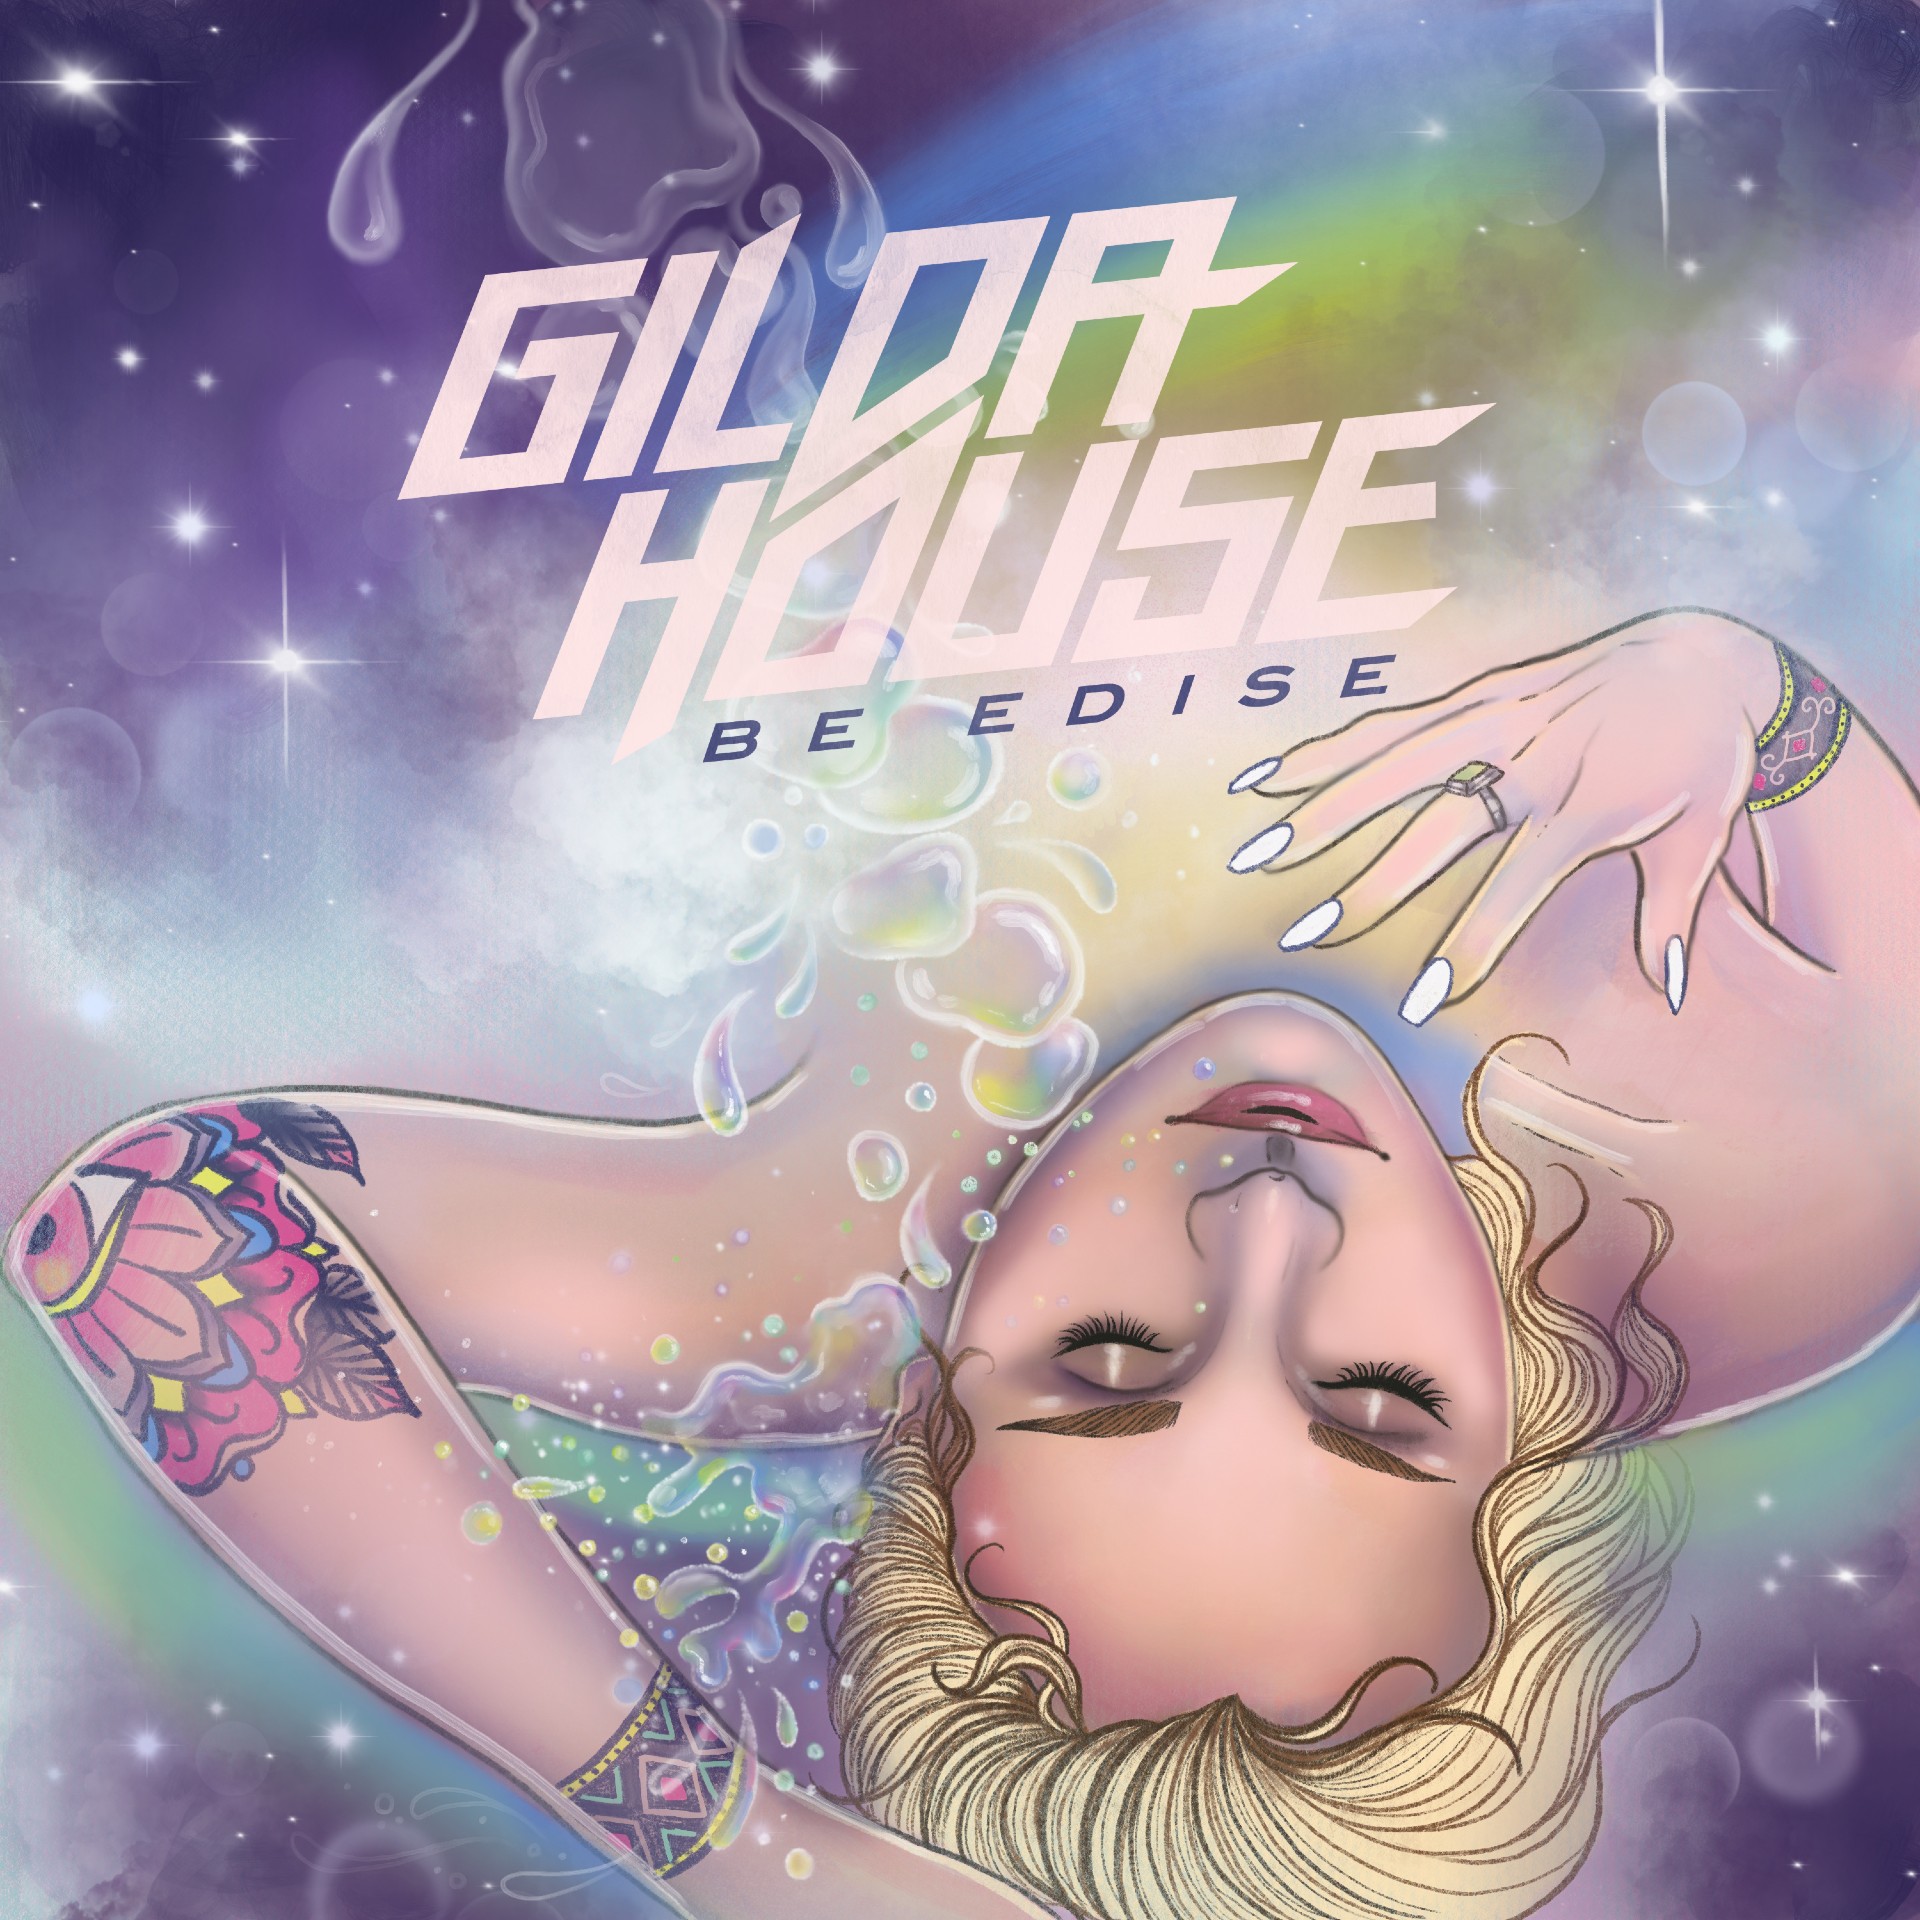 Gilda House ‘Be Edise’ EP album artwork